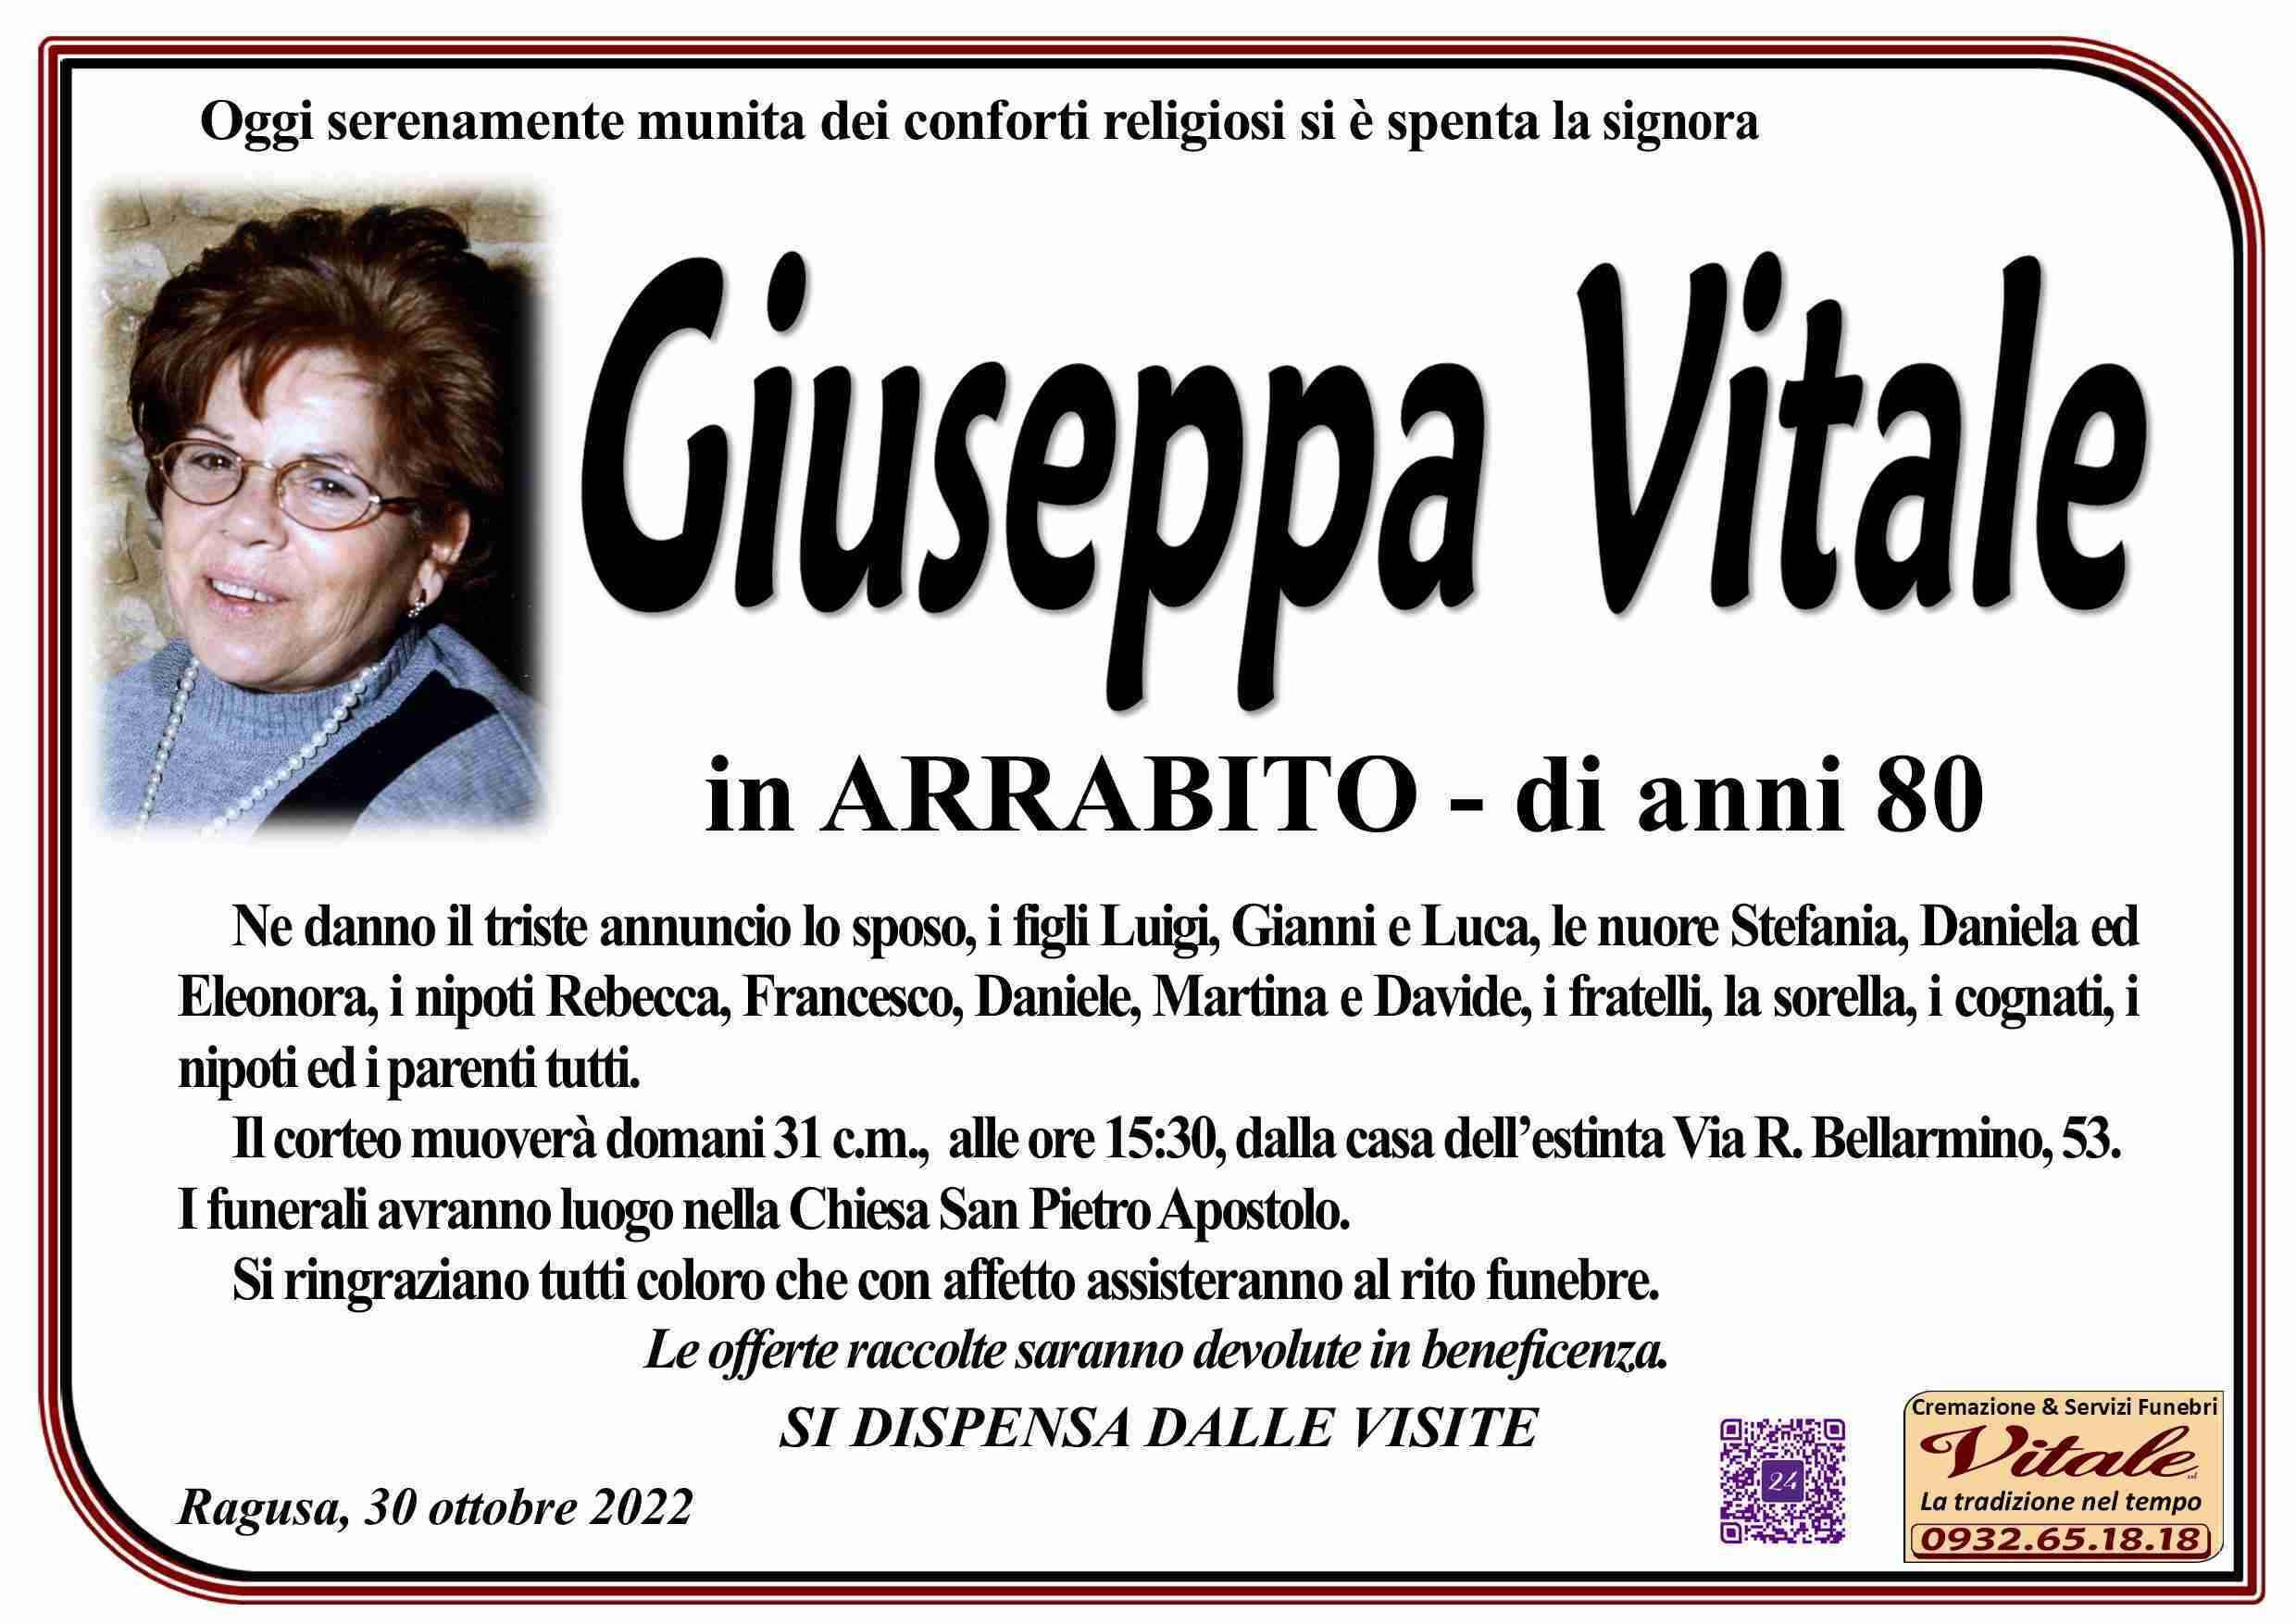 Giuseppa Vitale